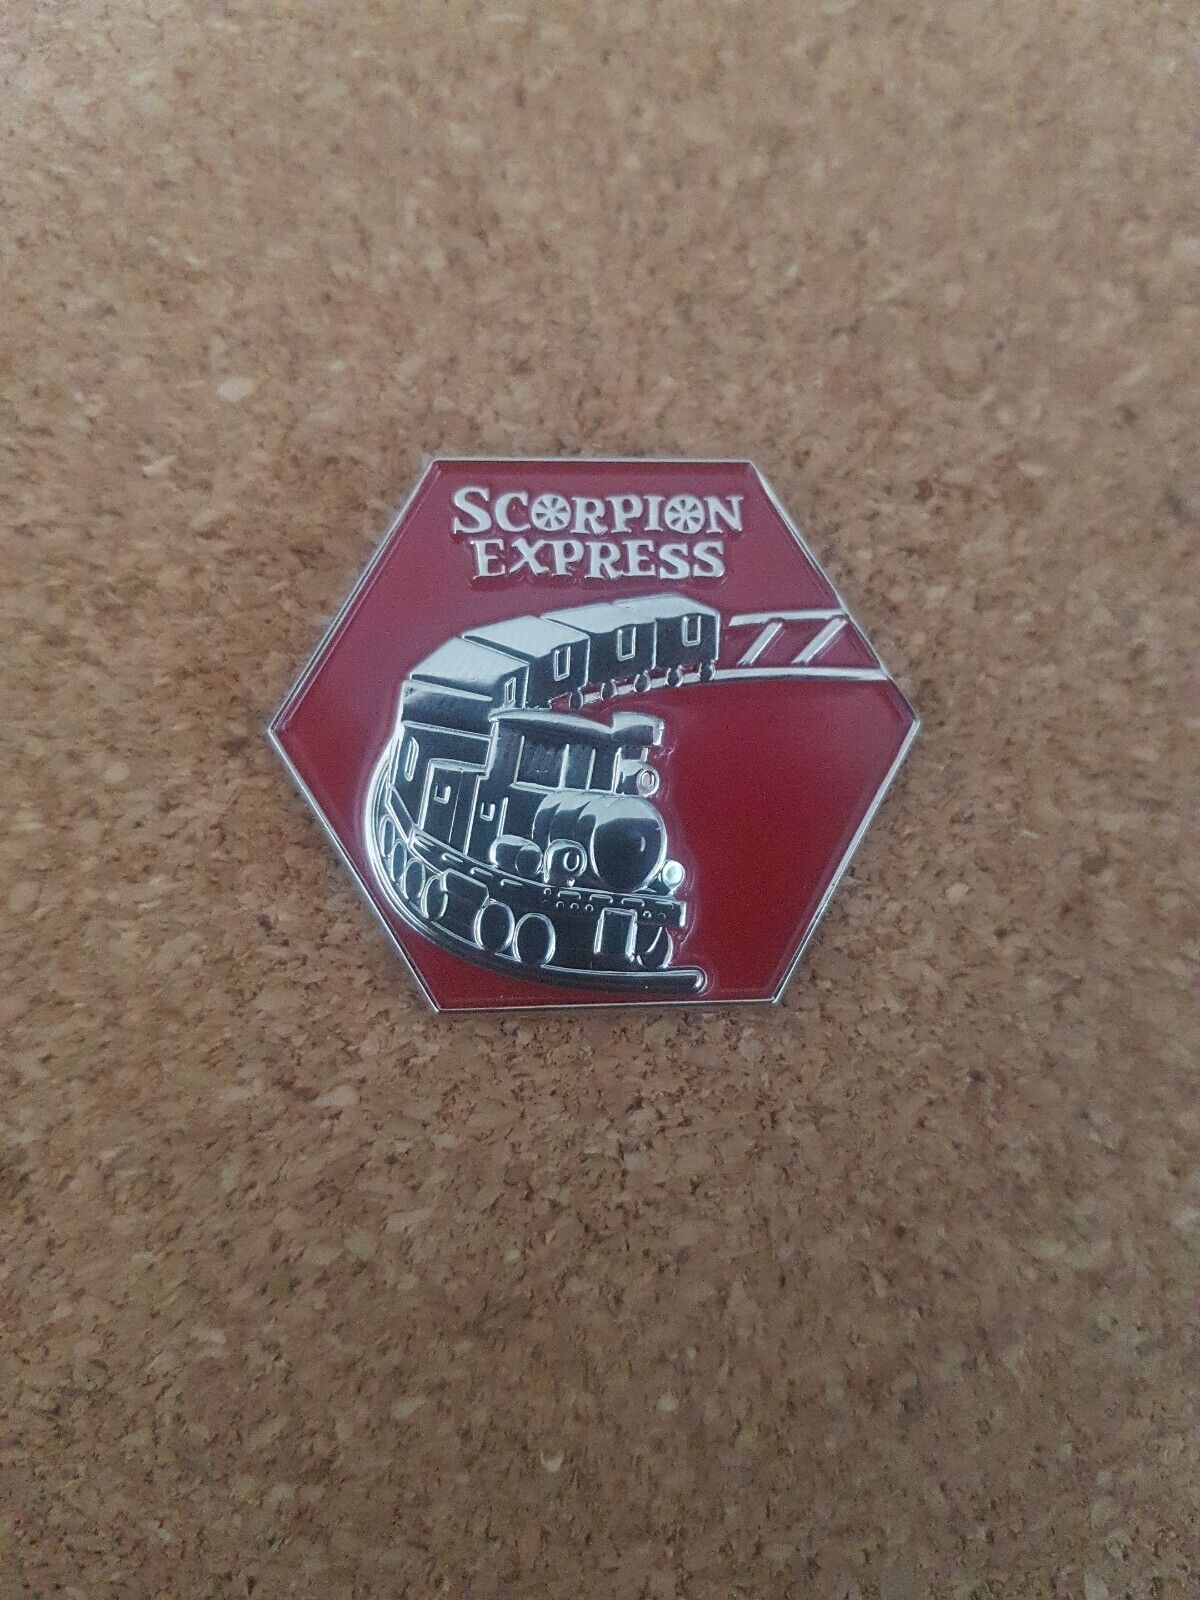 chessington scorpion  Express pin badge Thorpe park Alton towers 